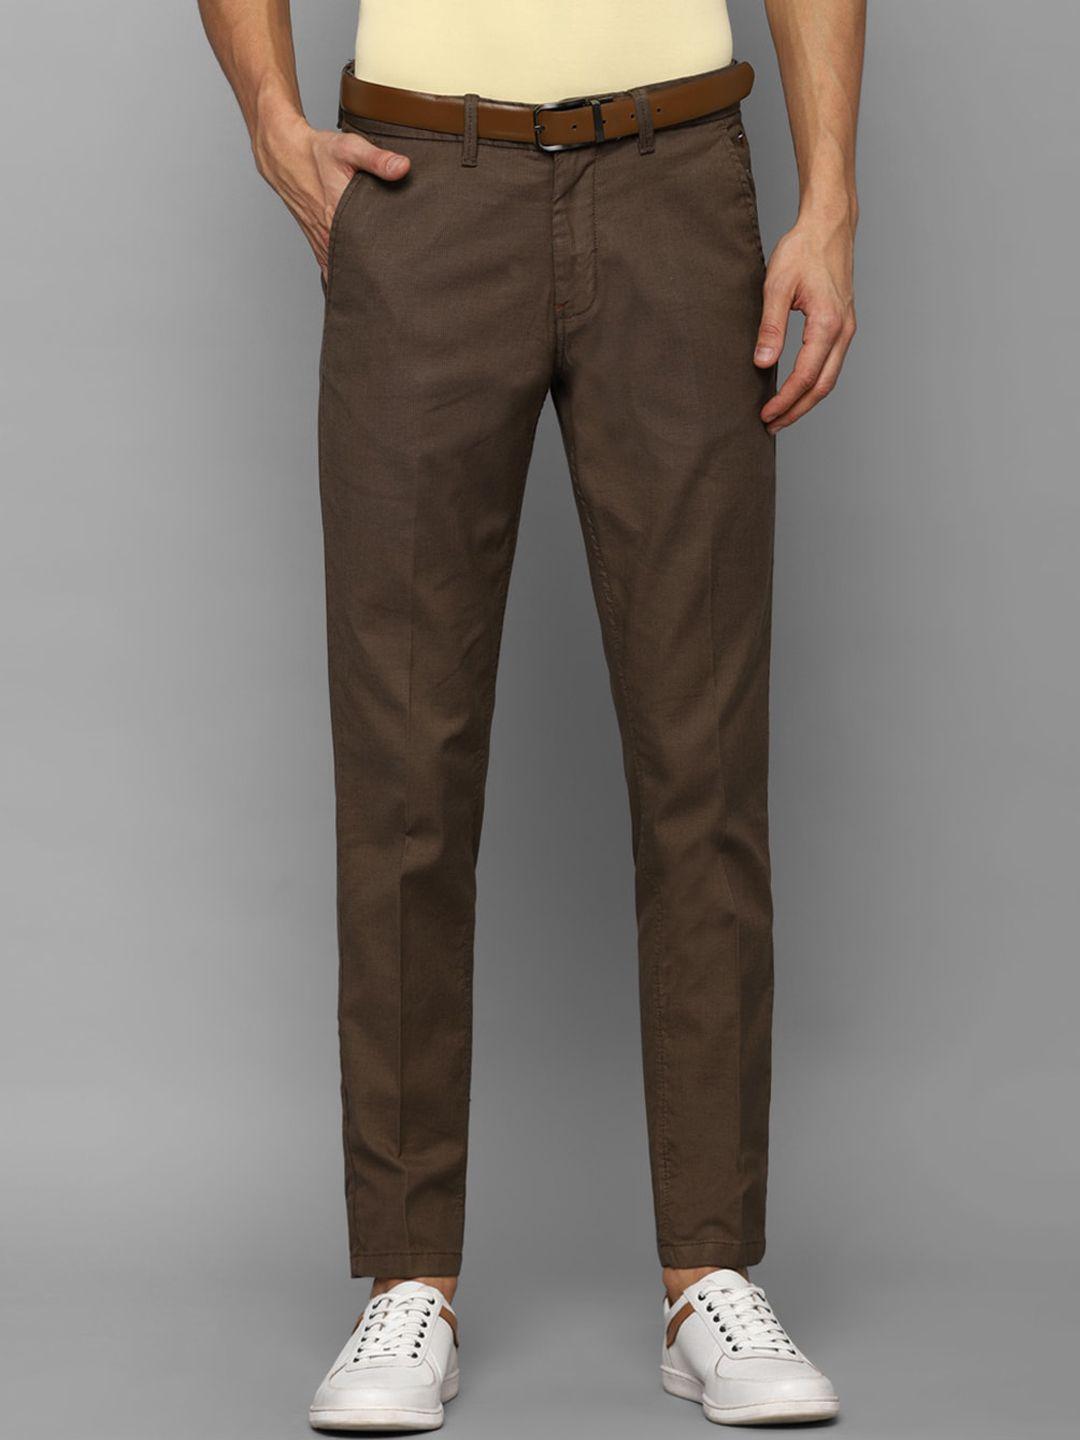 louis-philippe-sport-men-brown-textured-slim-fit-trousers